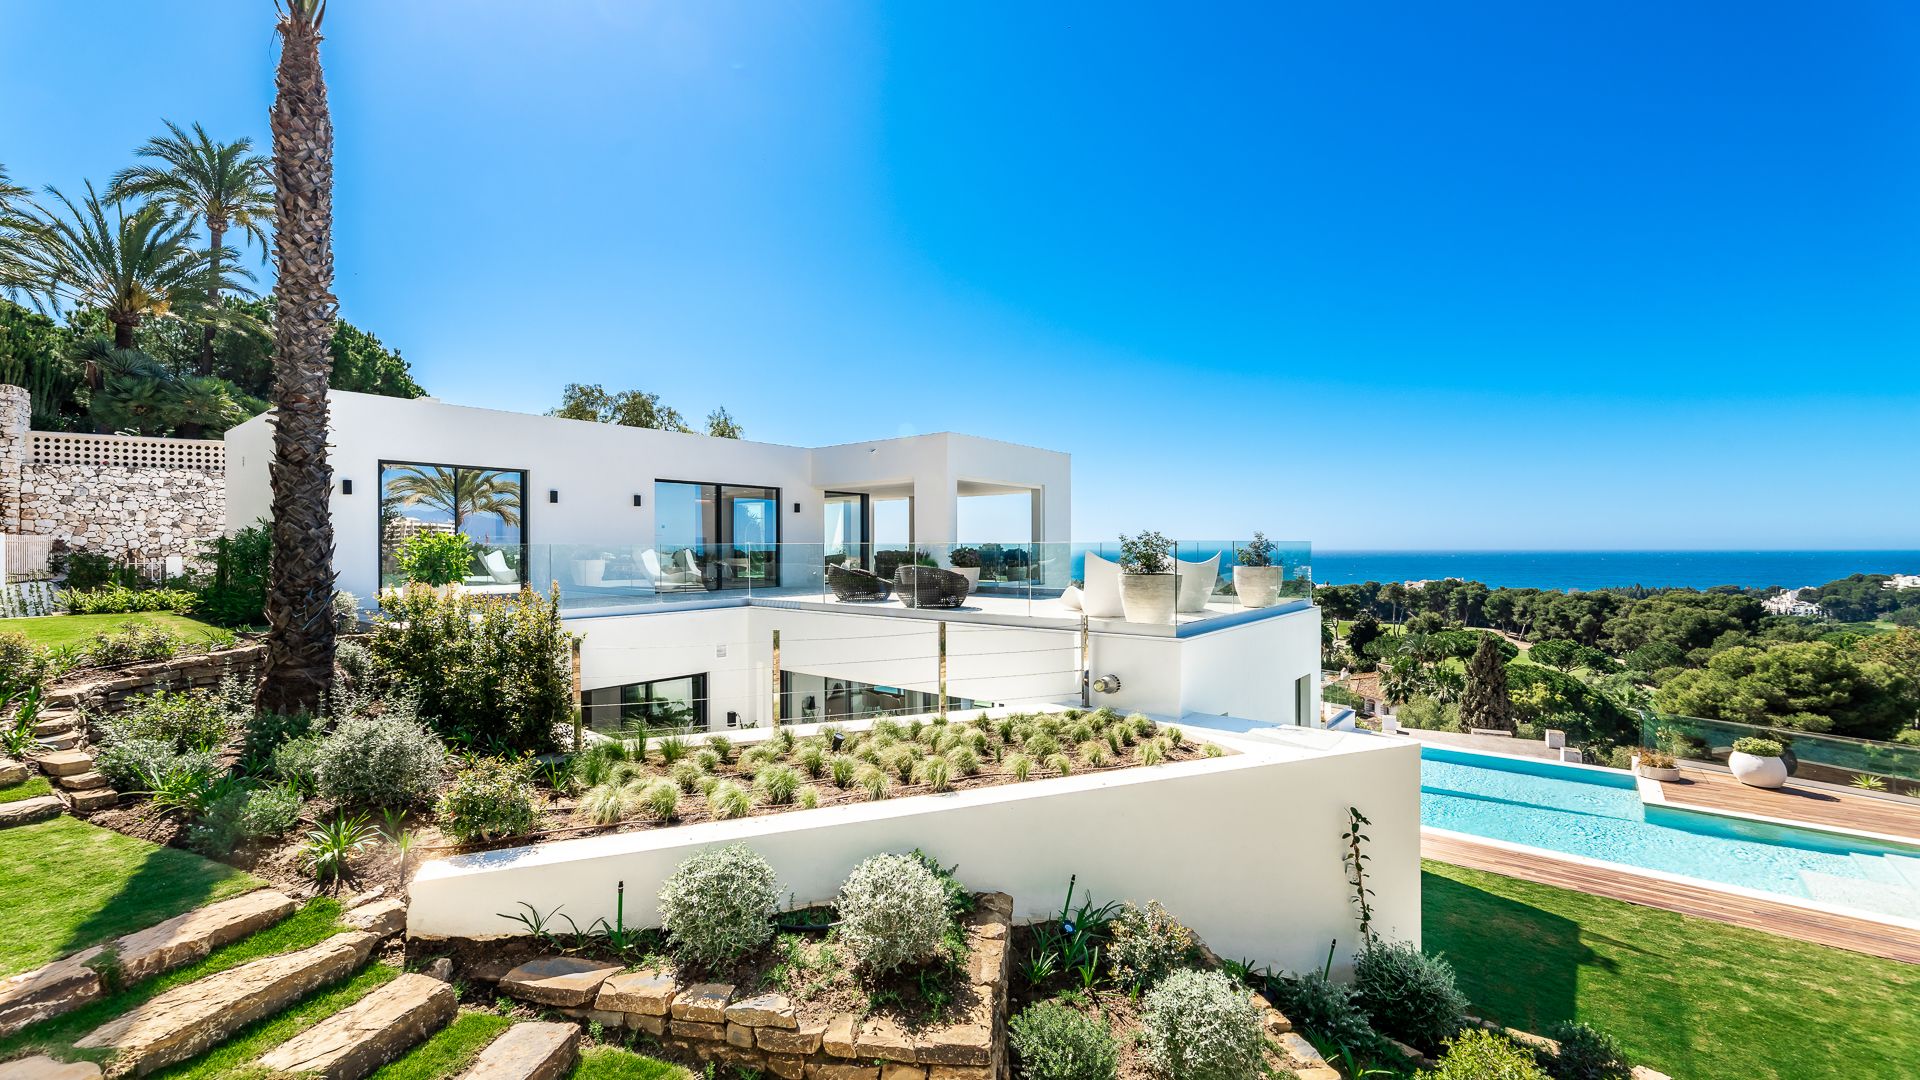 Modern luxury villa with breathtaking views in the best area of Río Real | Engel & Völkers Marbella